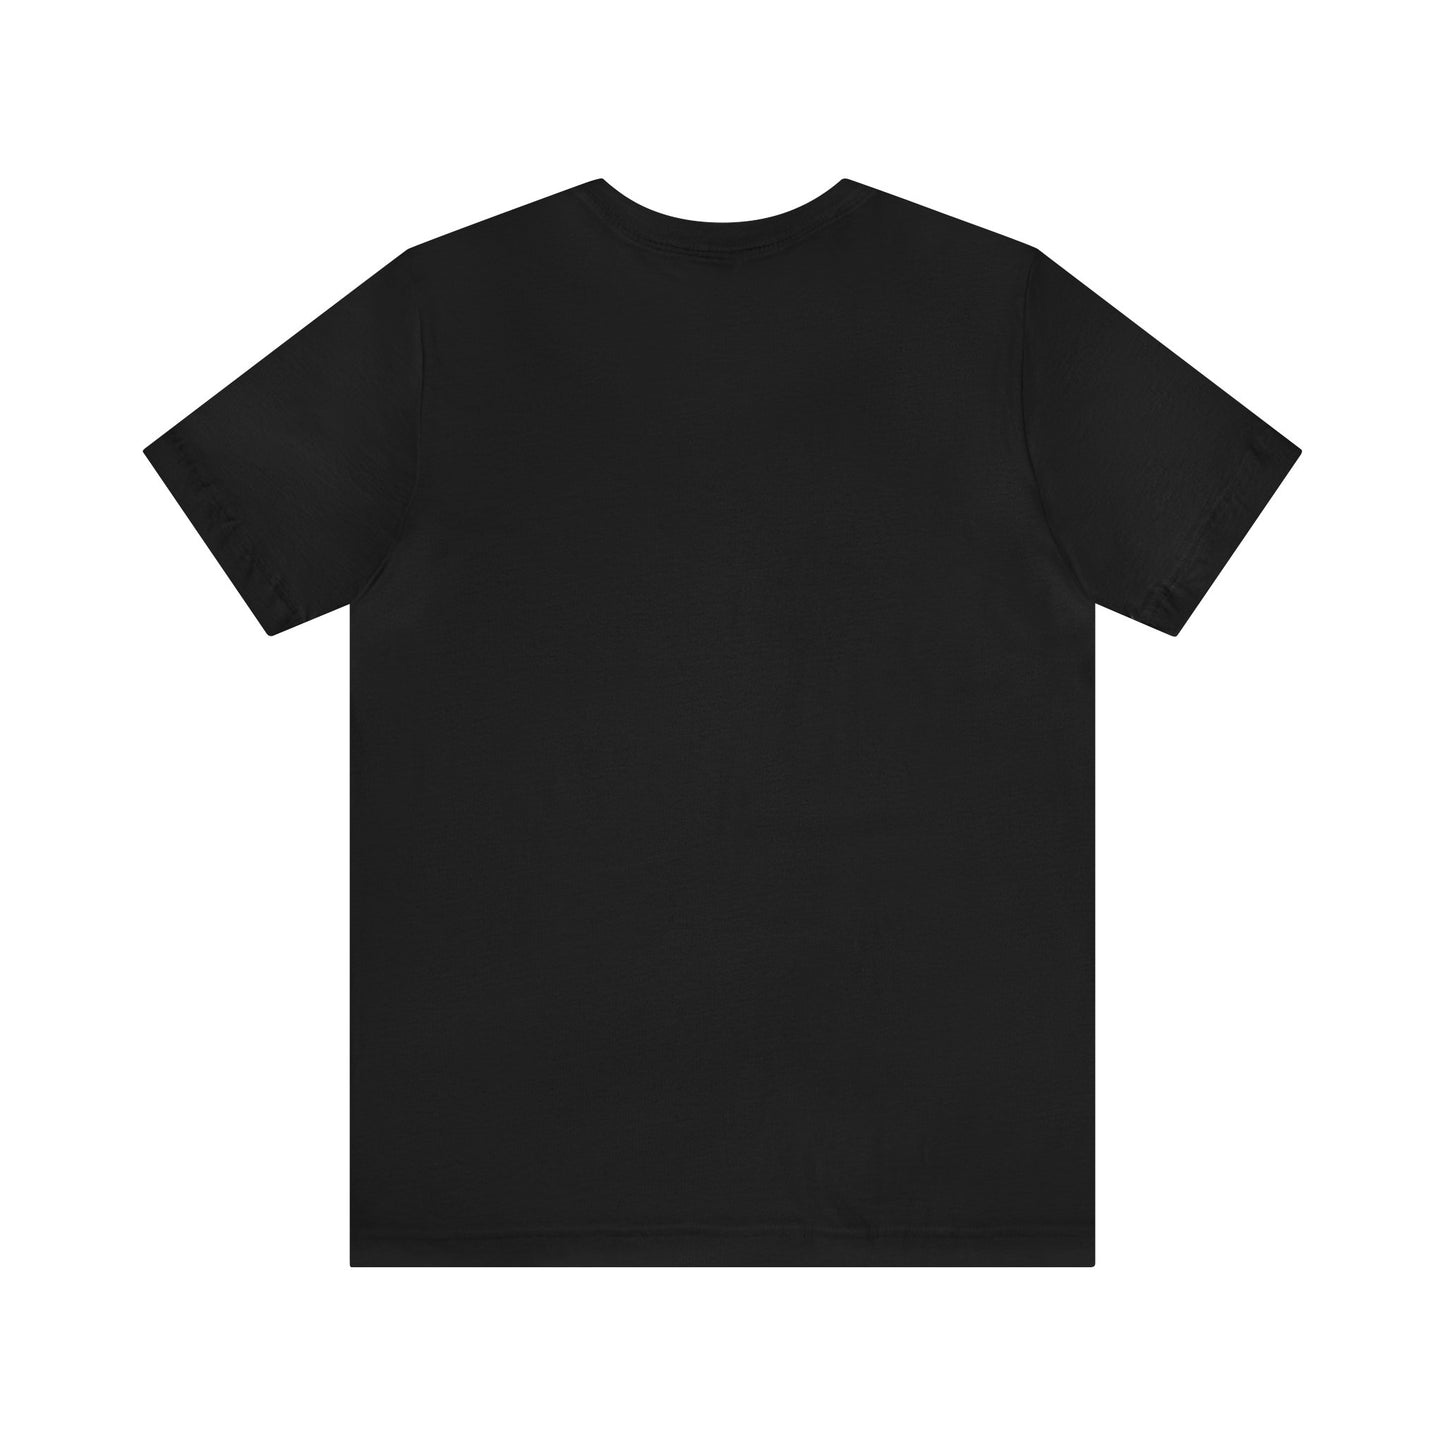 Fyroce ASD T-Shirt